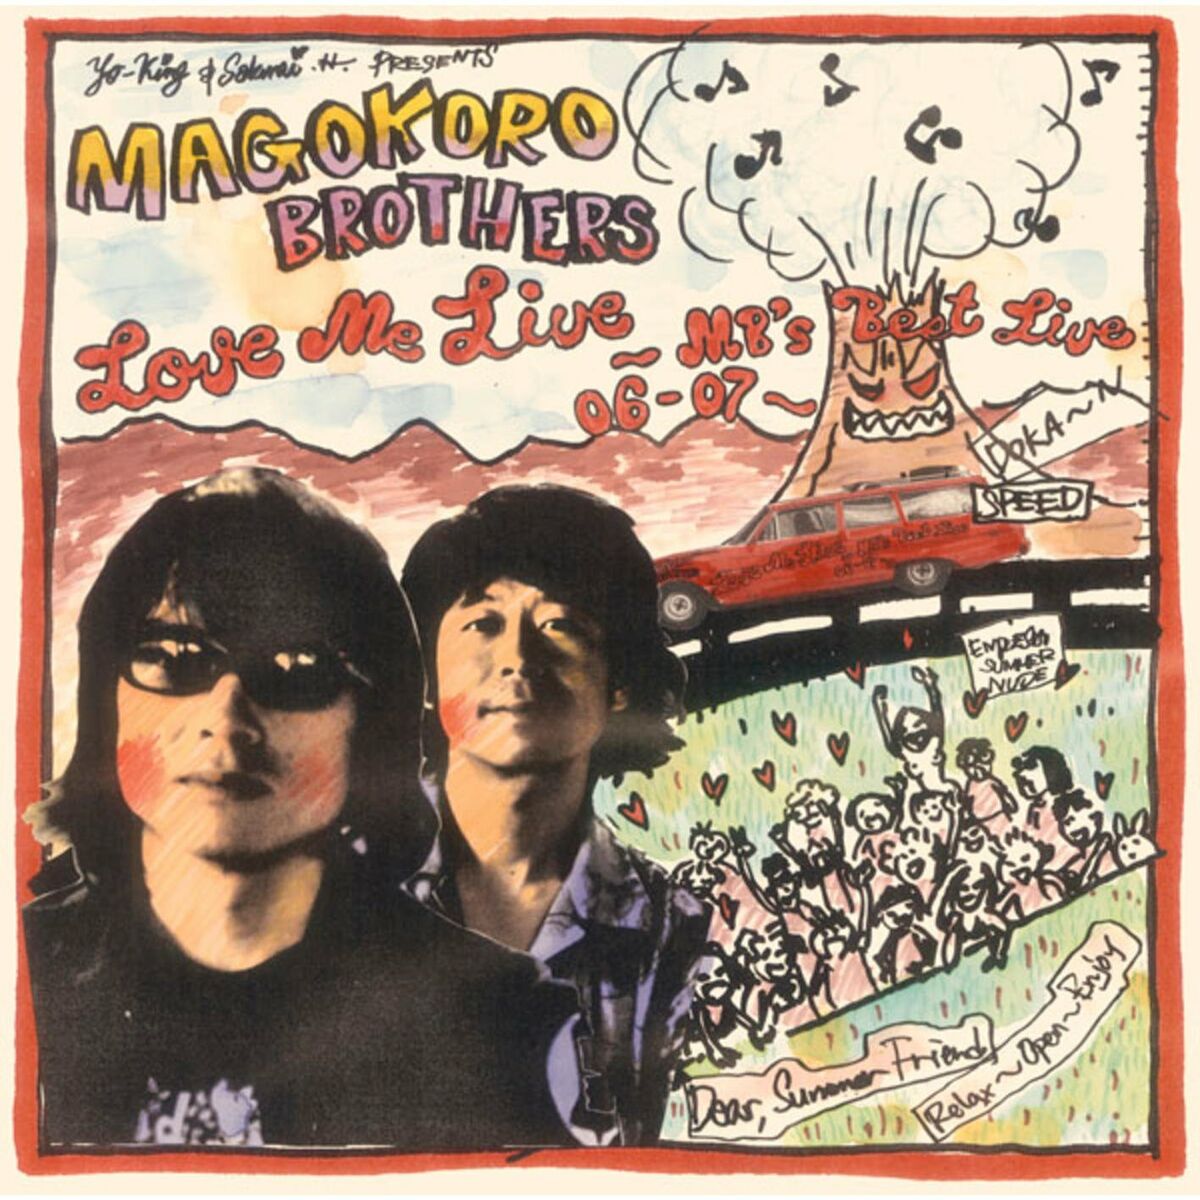 Magokoro Brothers: albums